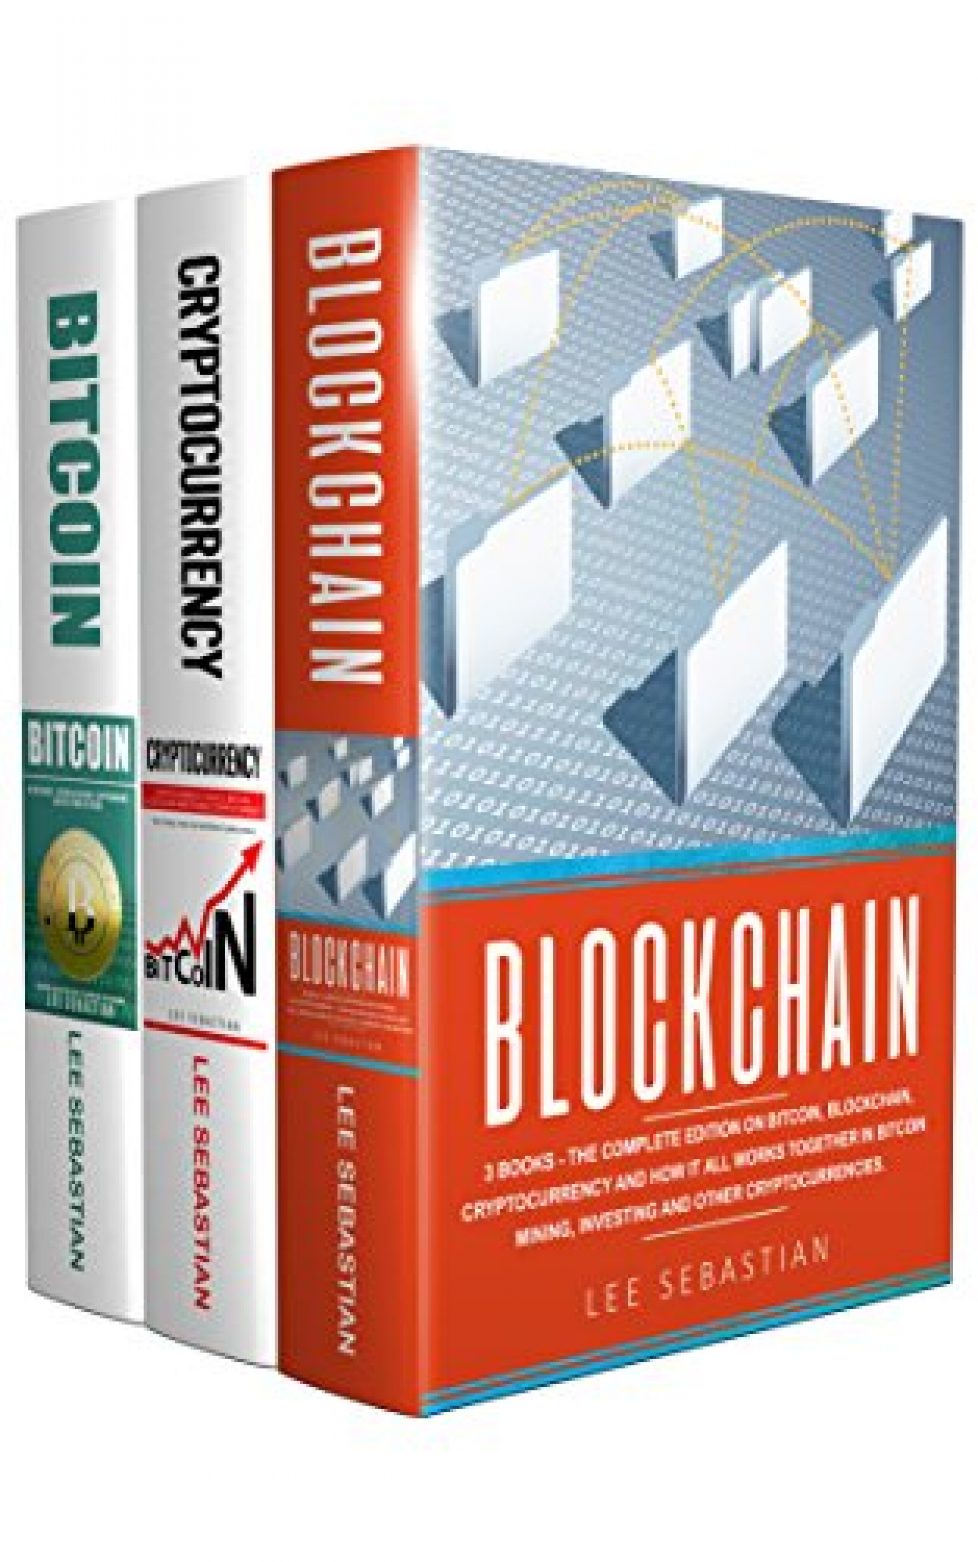 princeton blockchain book